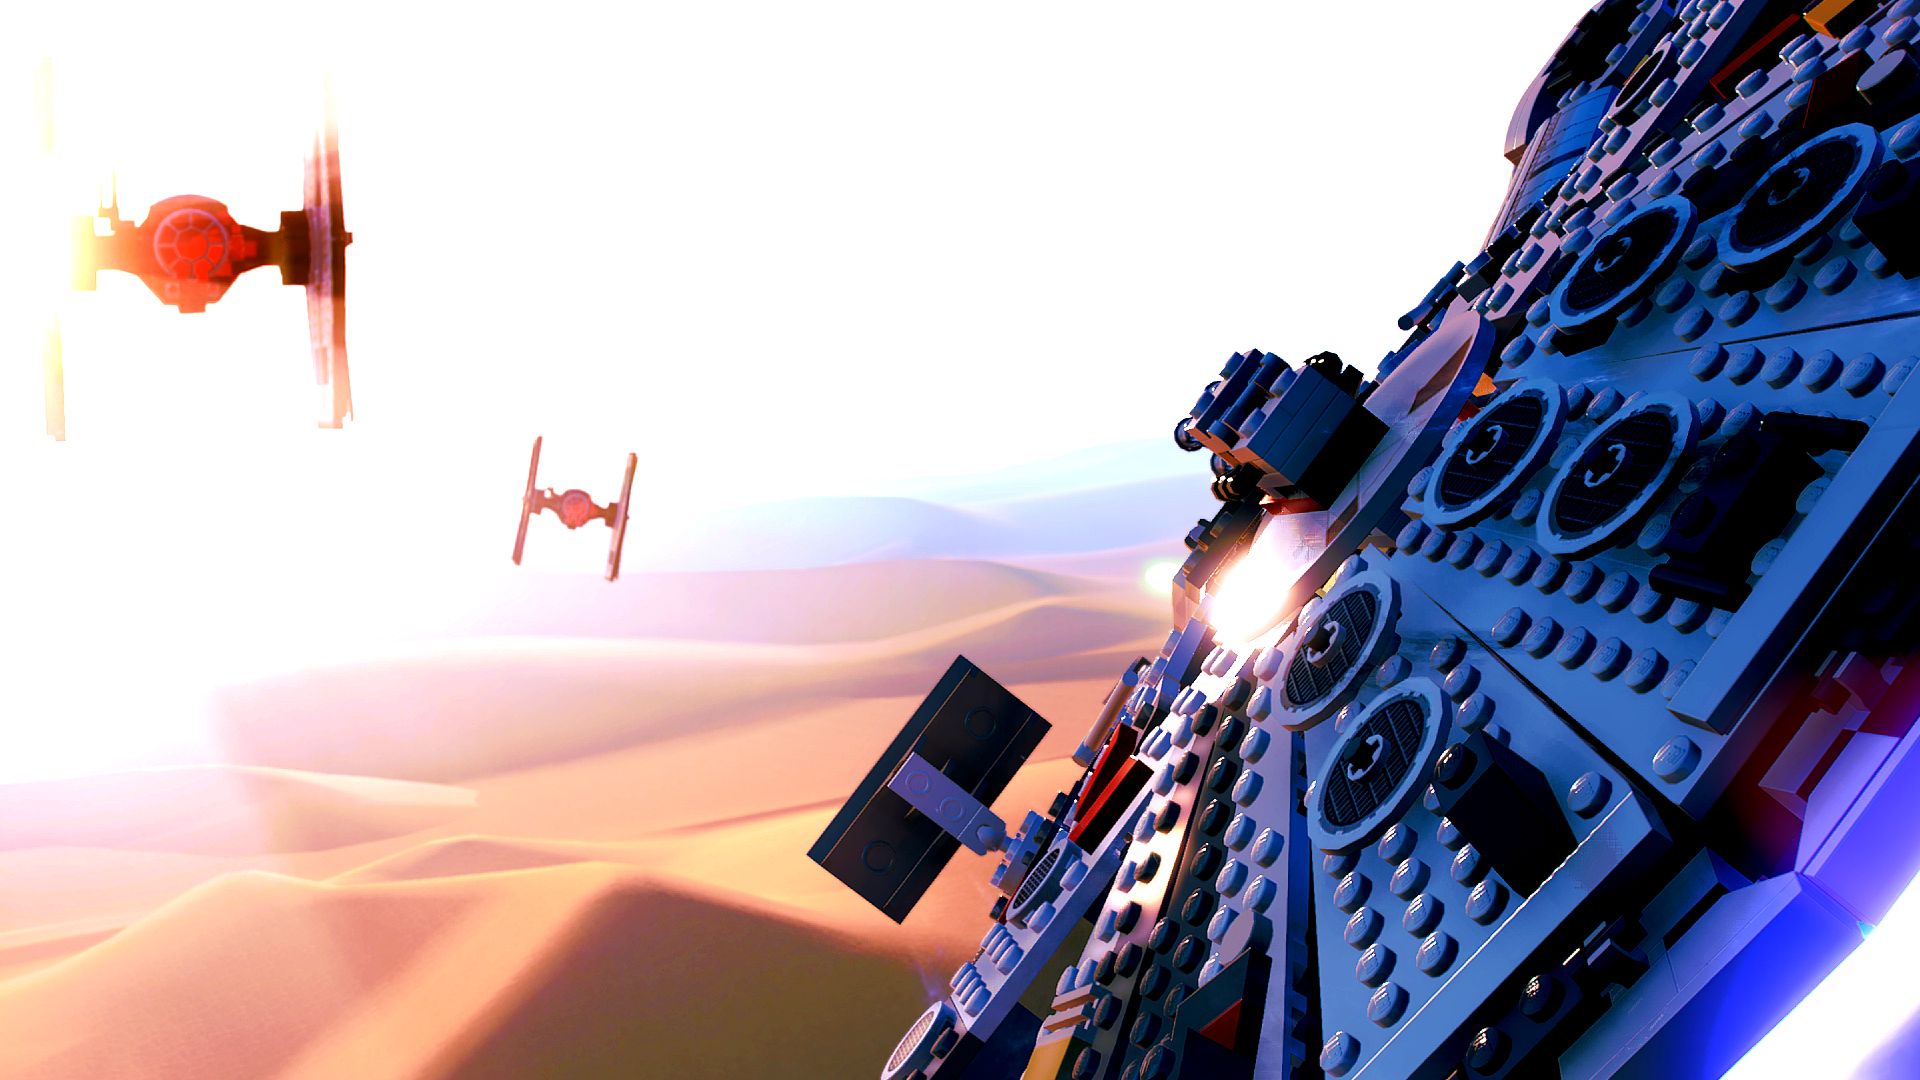 All Character, Ship Codes For Lego Star Wars The Skywalker Saga